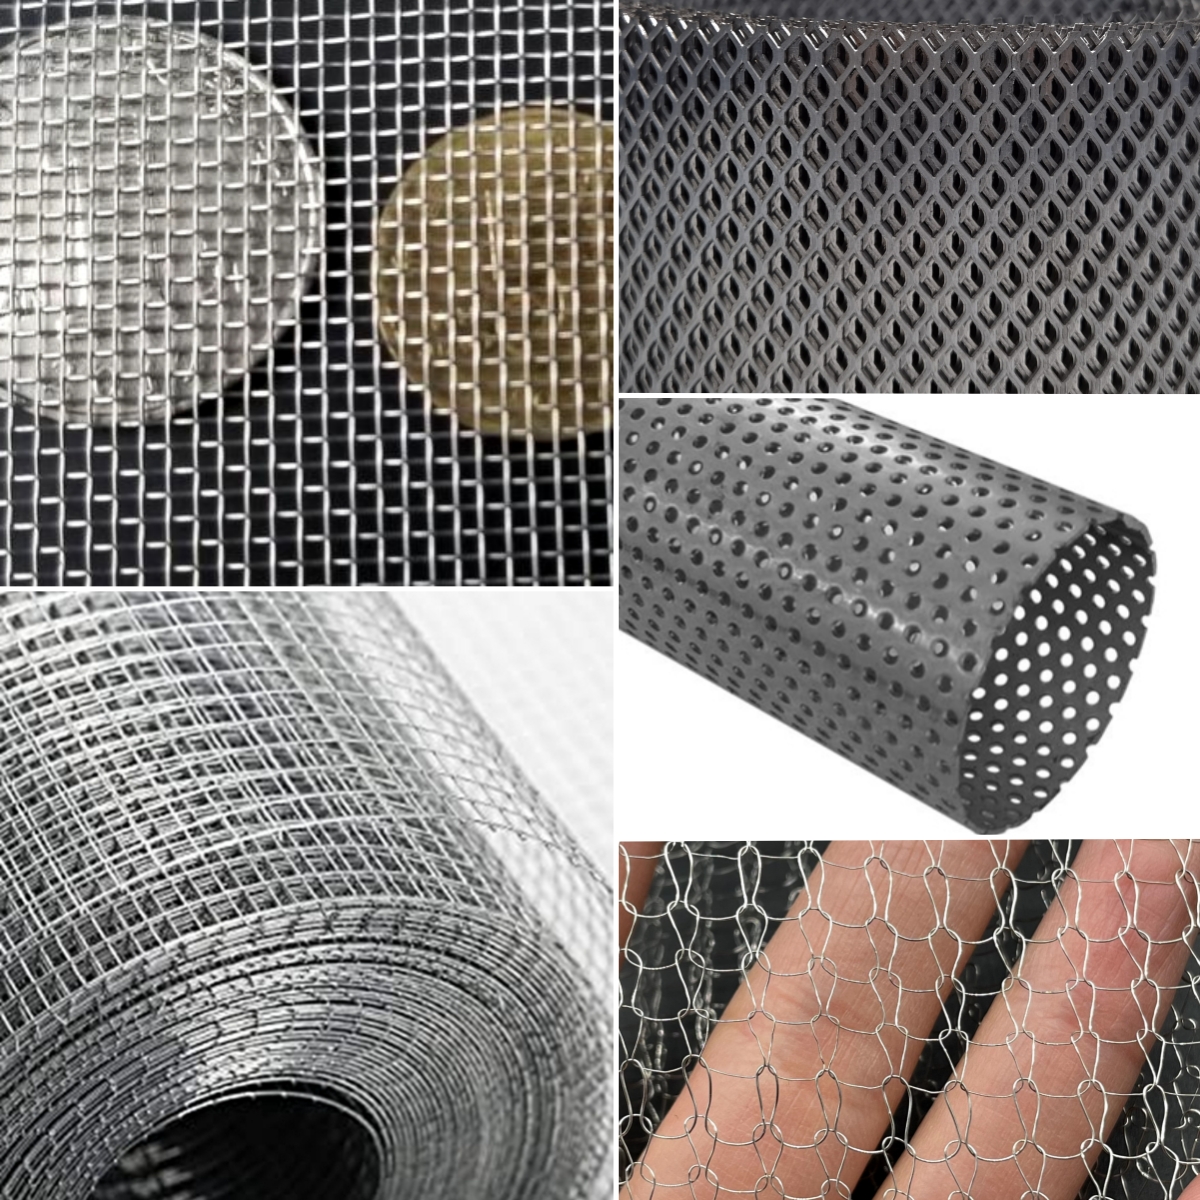 5 common metal filter mesh